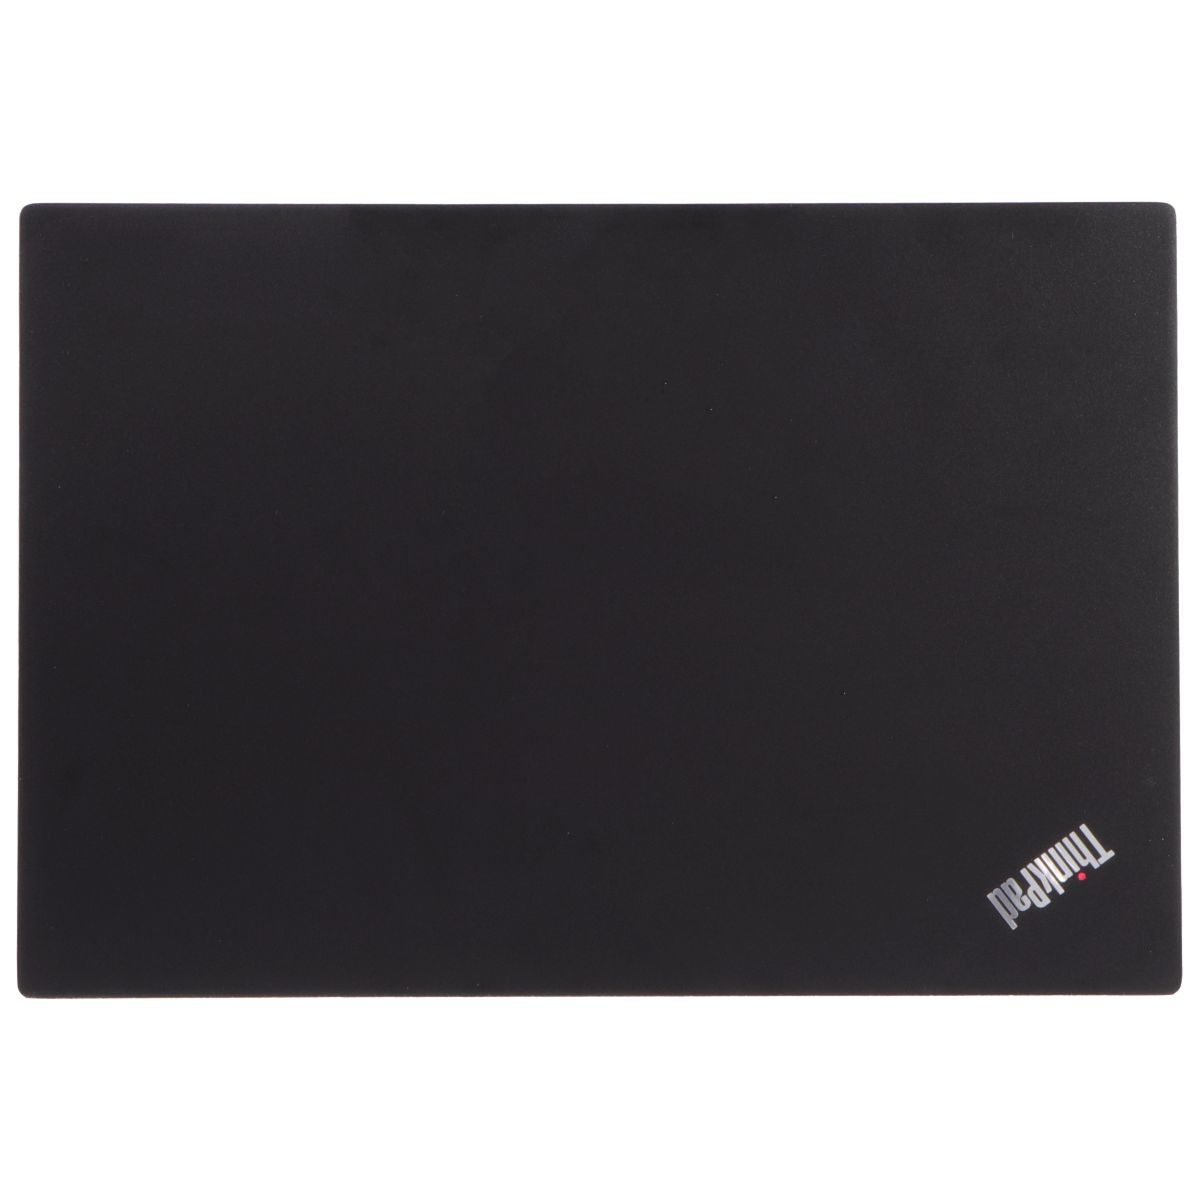 Lenovo ThinkPad L13 Gen 2 (13.3-inch) Laptop i5-1135G7 / 256GB SSD / 8GB - Black Laptops - PC Laptops & Netbooks Lenovo    - Simple Cell Bulk Wholesale Pricing - USA Seller